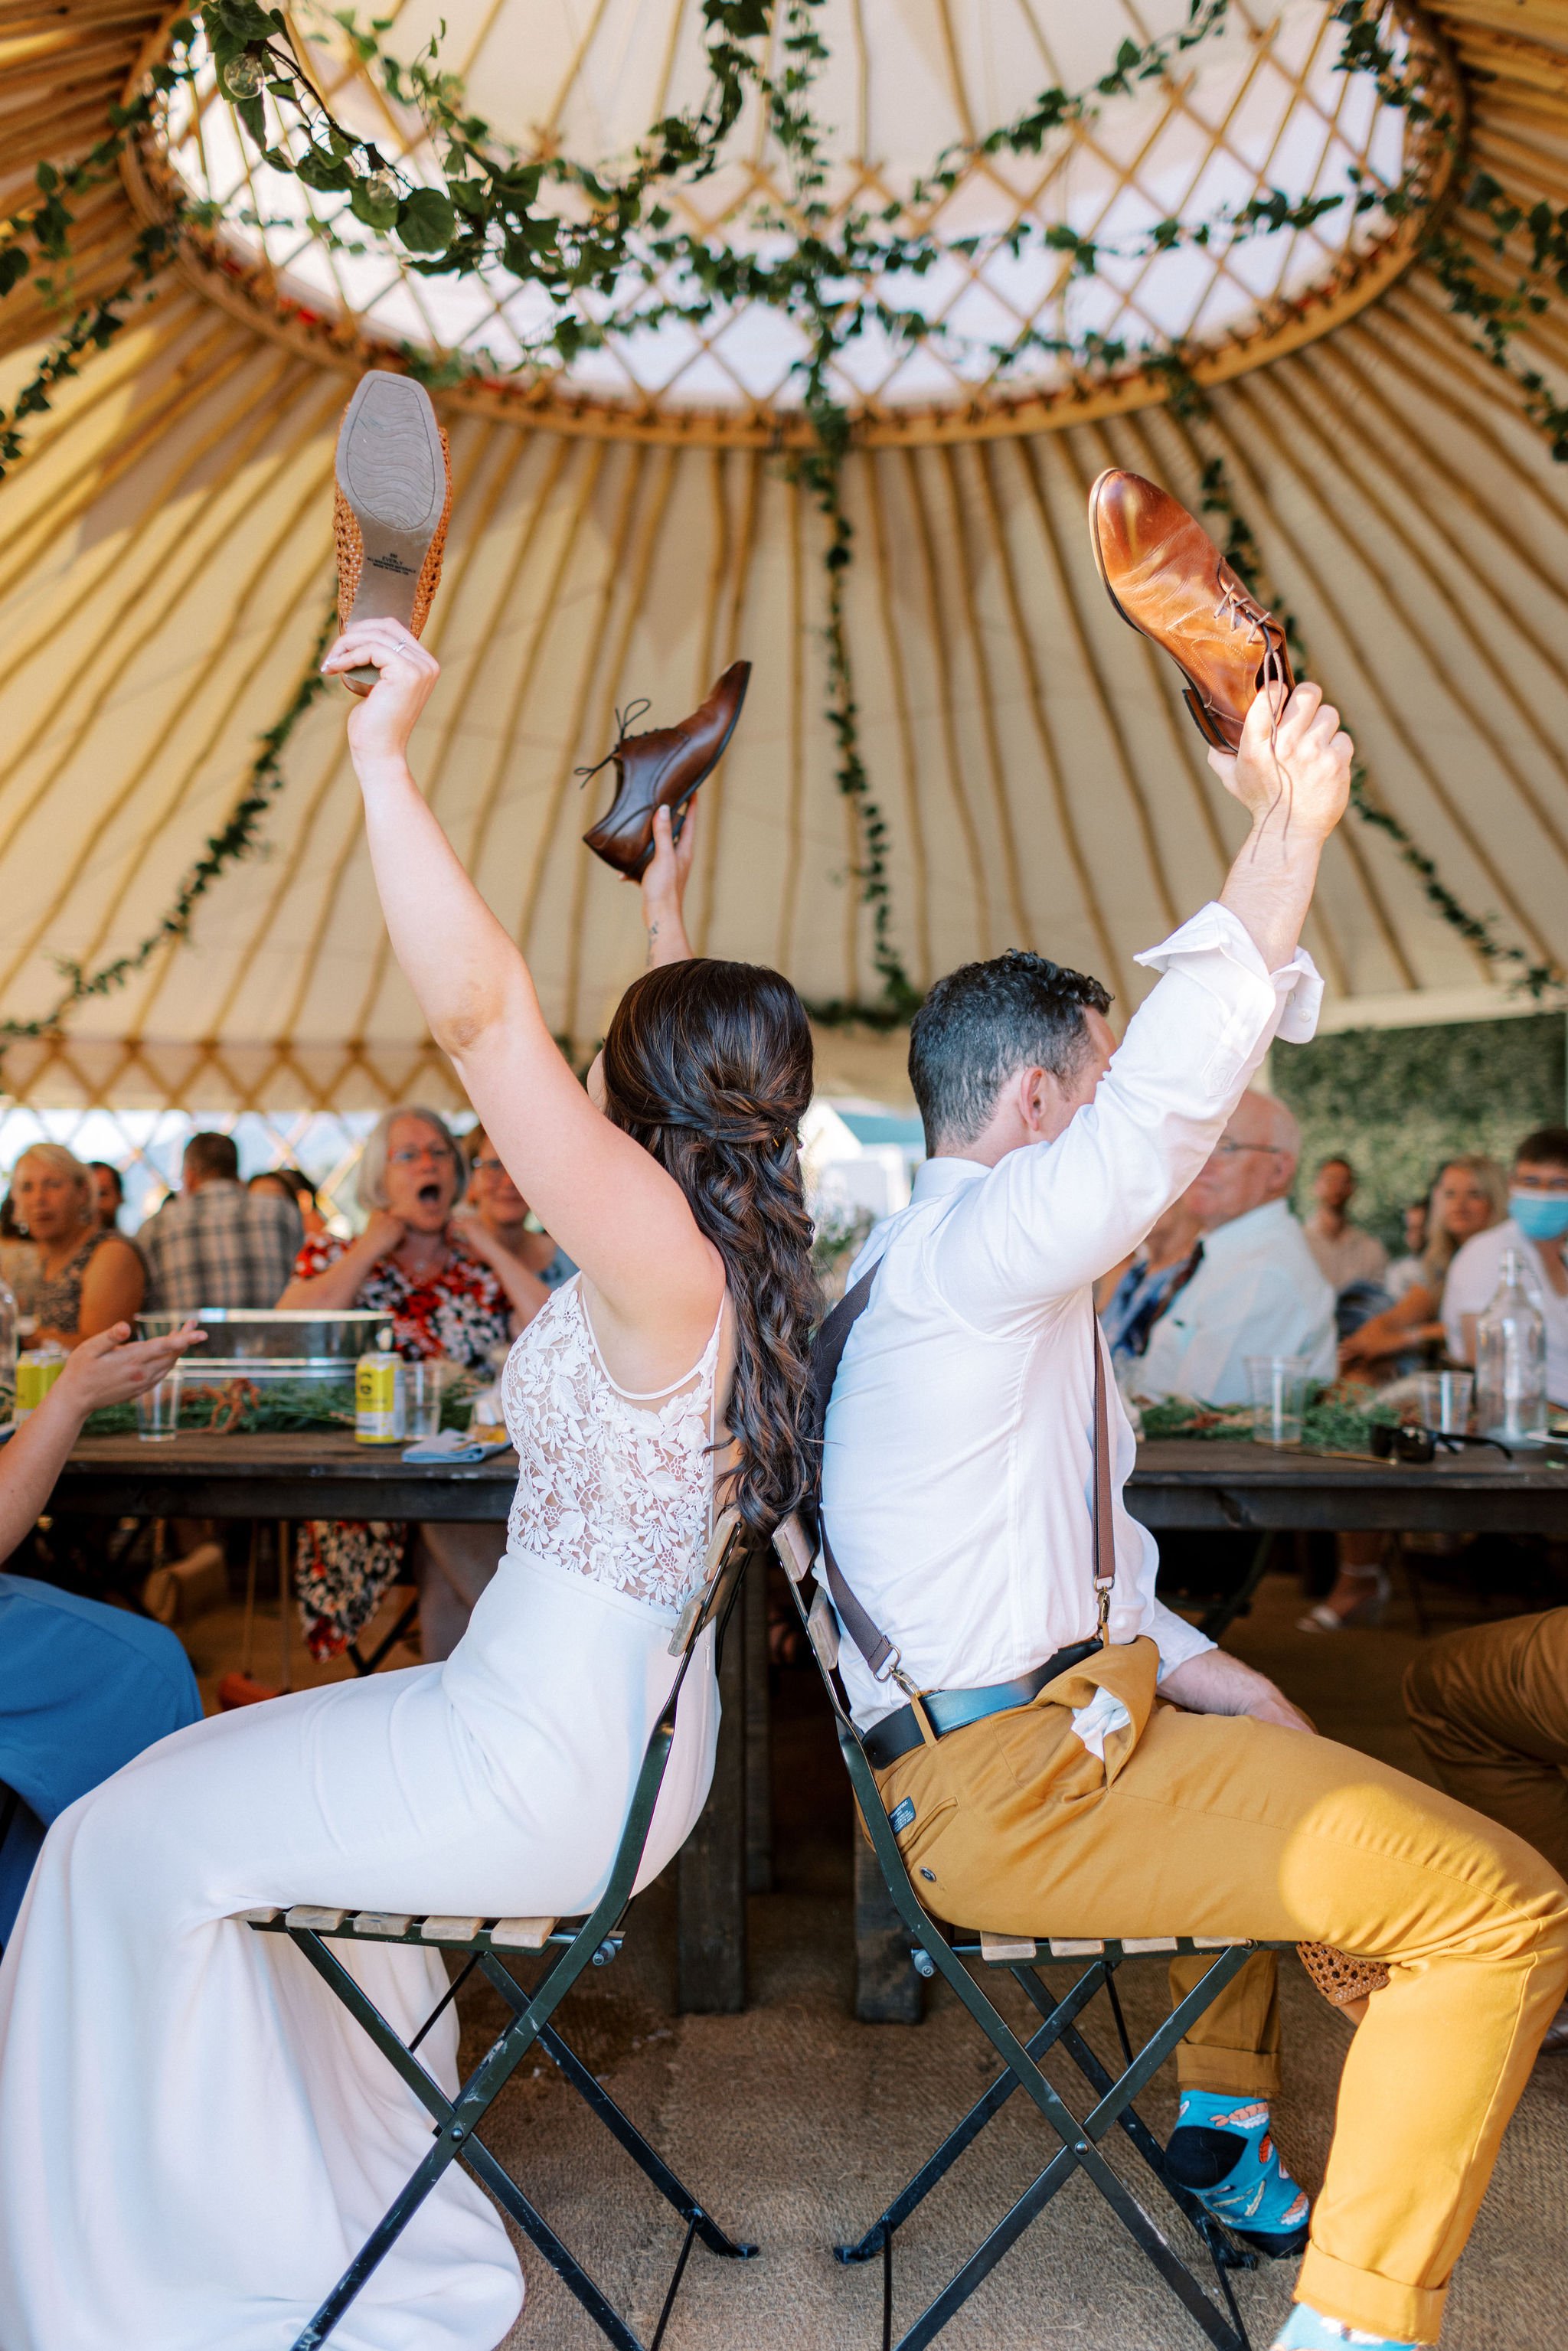 yurt-rental-nova-scotia-bride-groom-shoe-posejpg.jpg